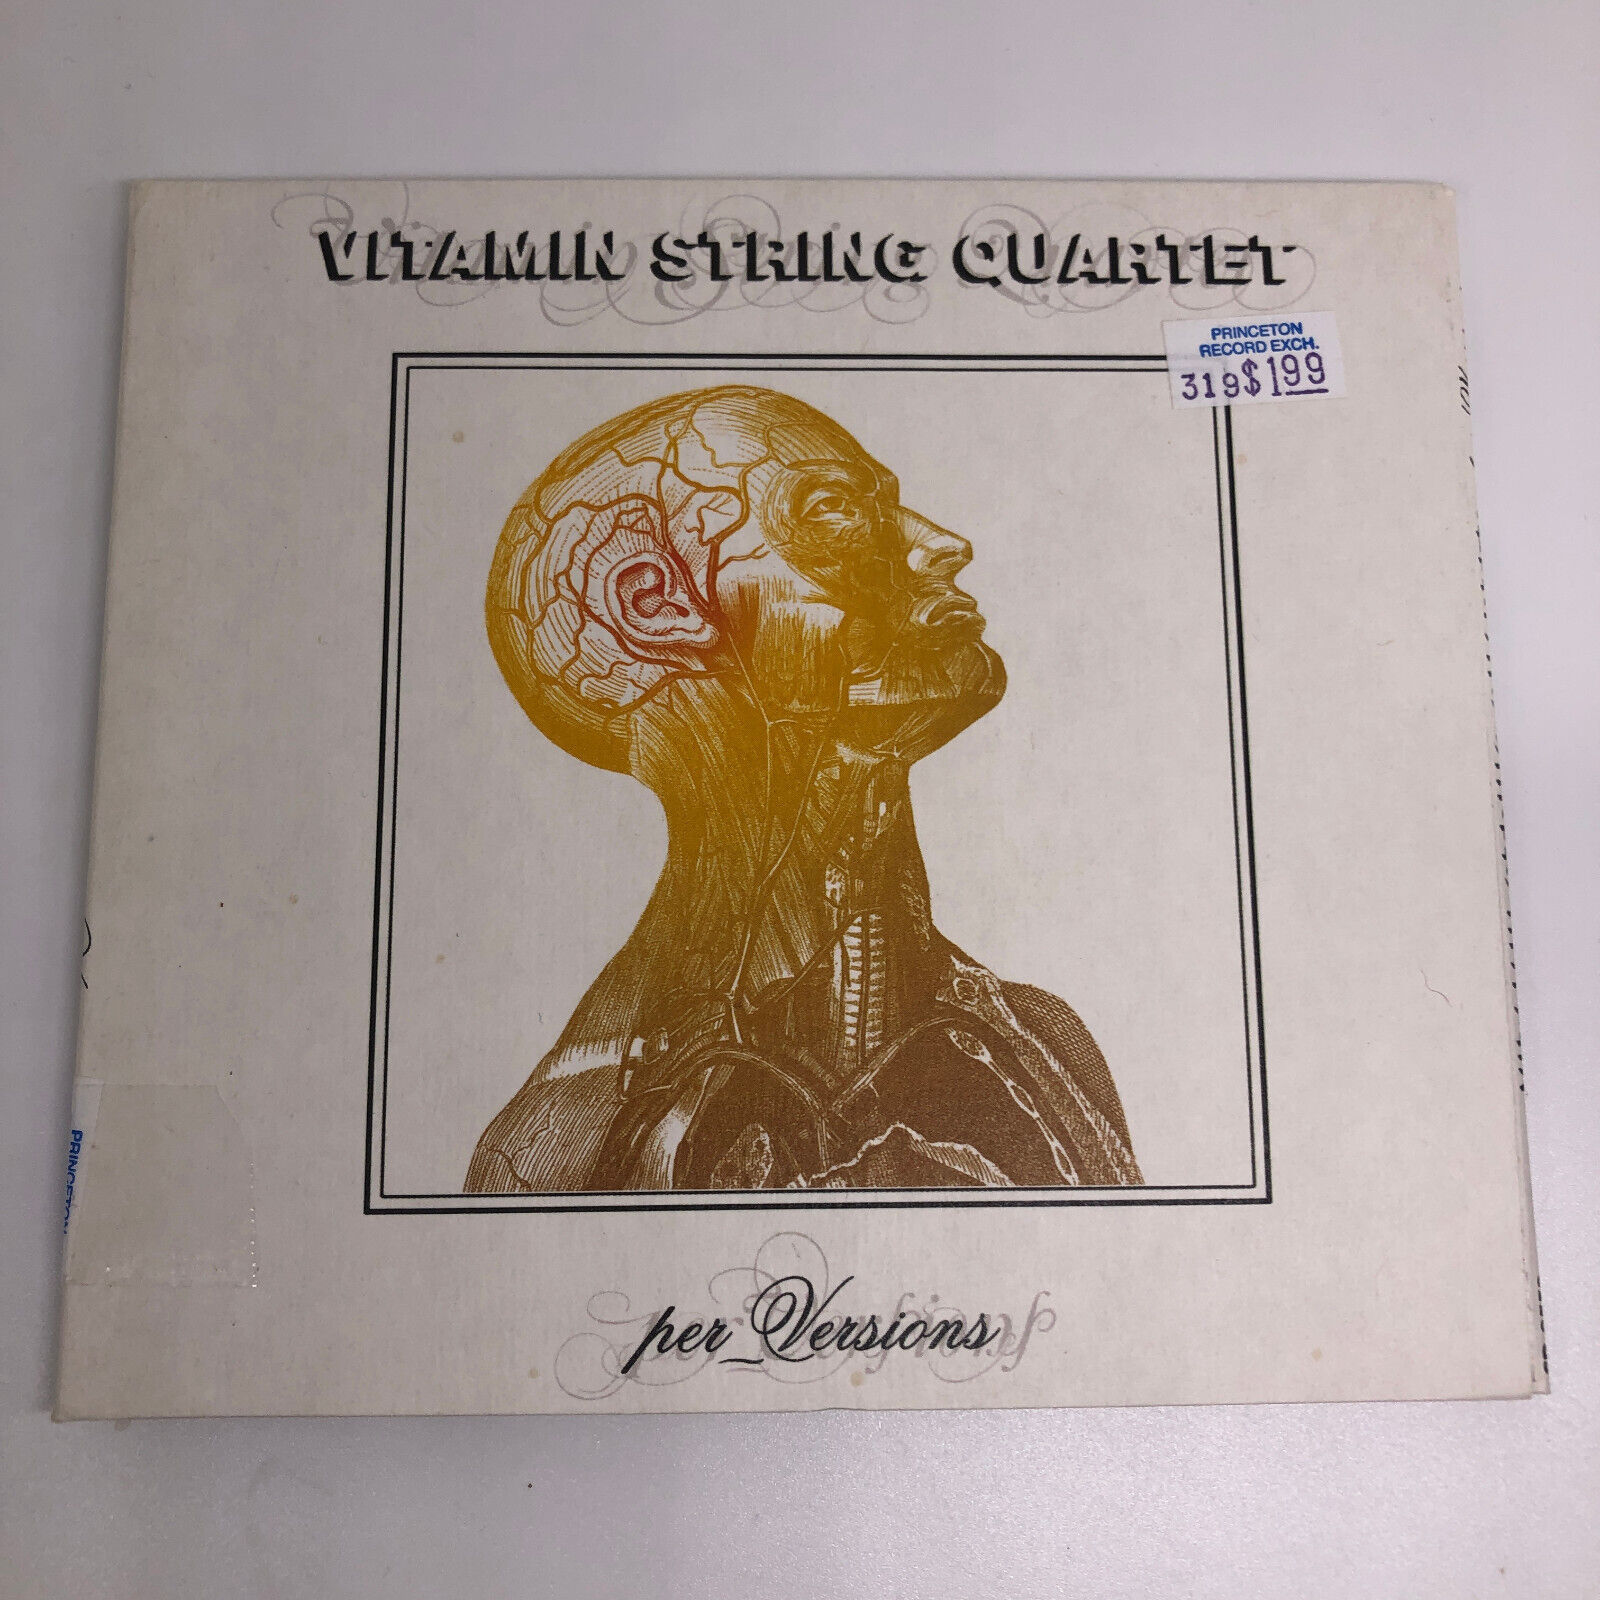 Vitamin String Quartet: Per Versions by Various Artists (CD, 2009)